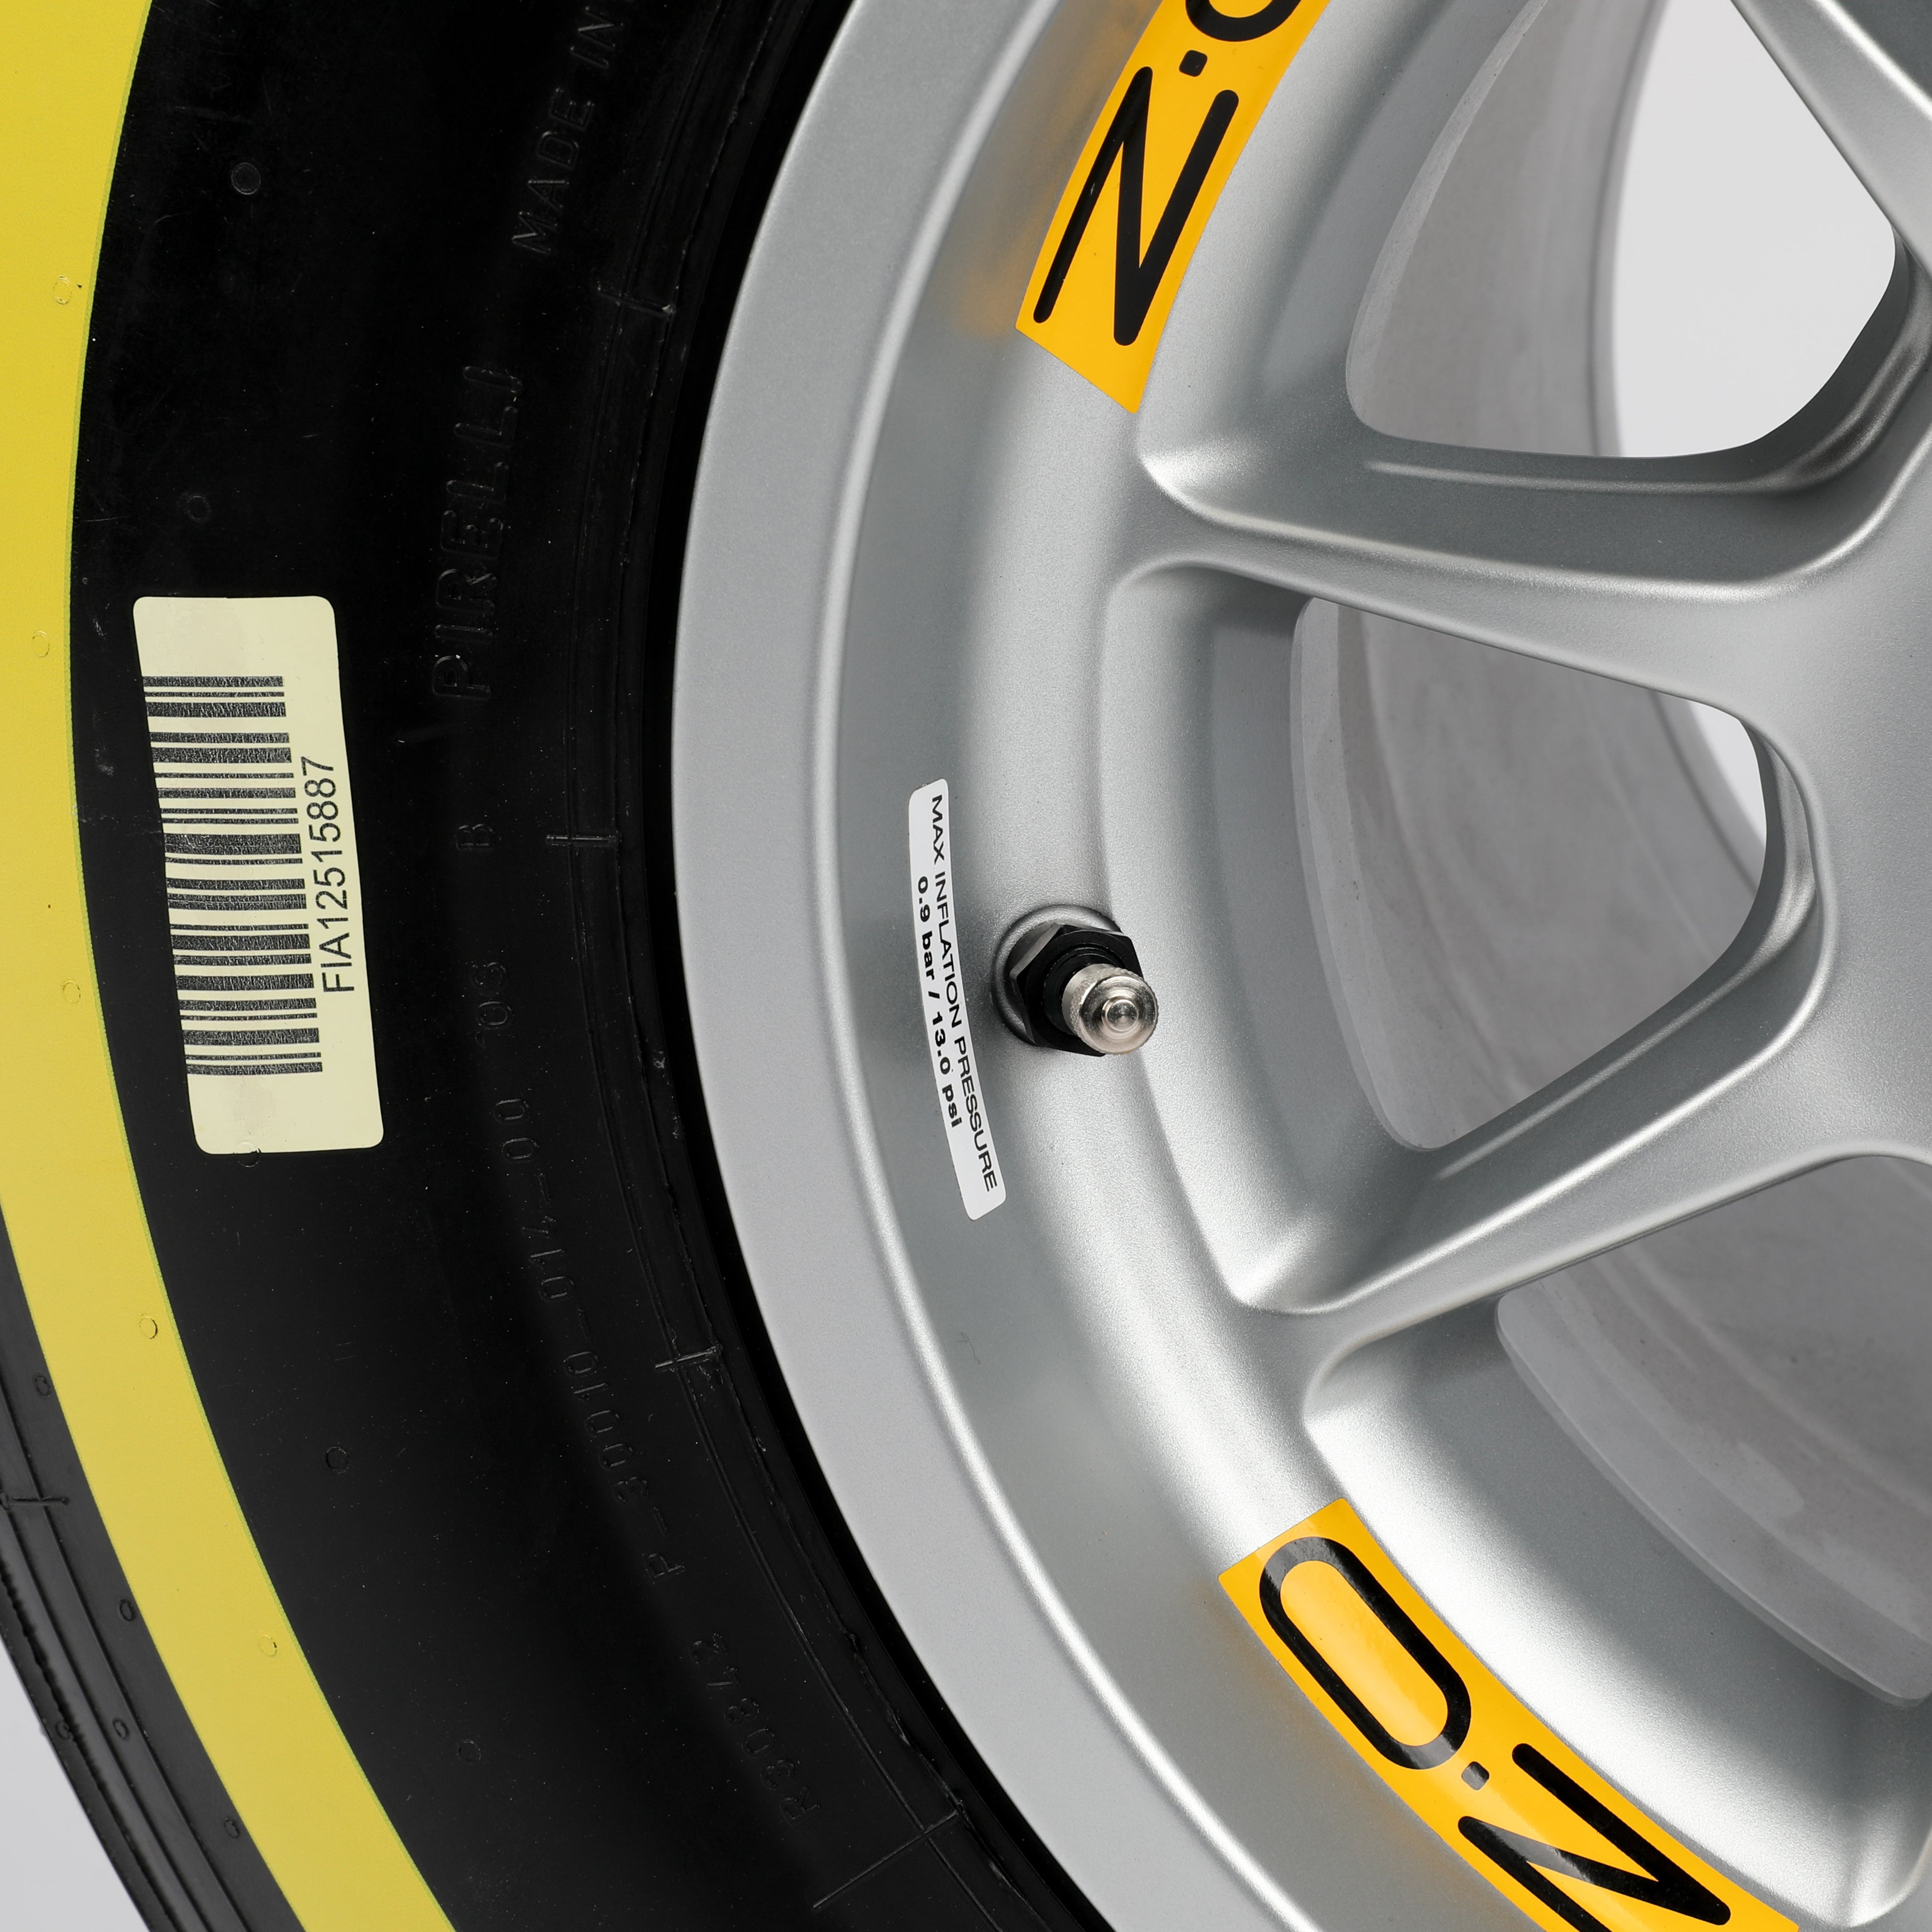 Pirelli Tyre Wheel Rim Table in Yellow